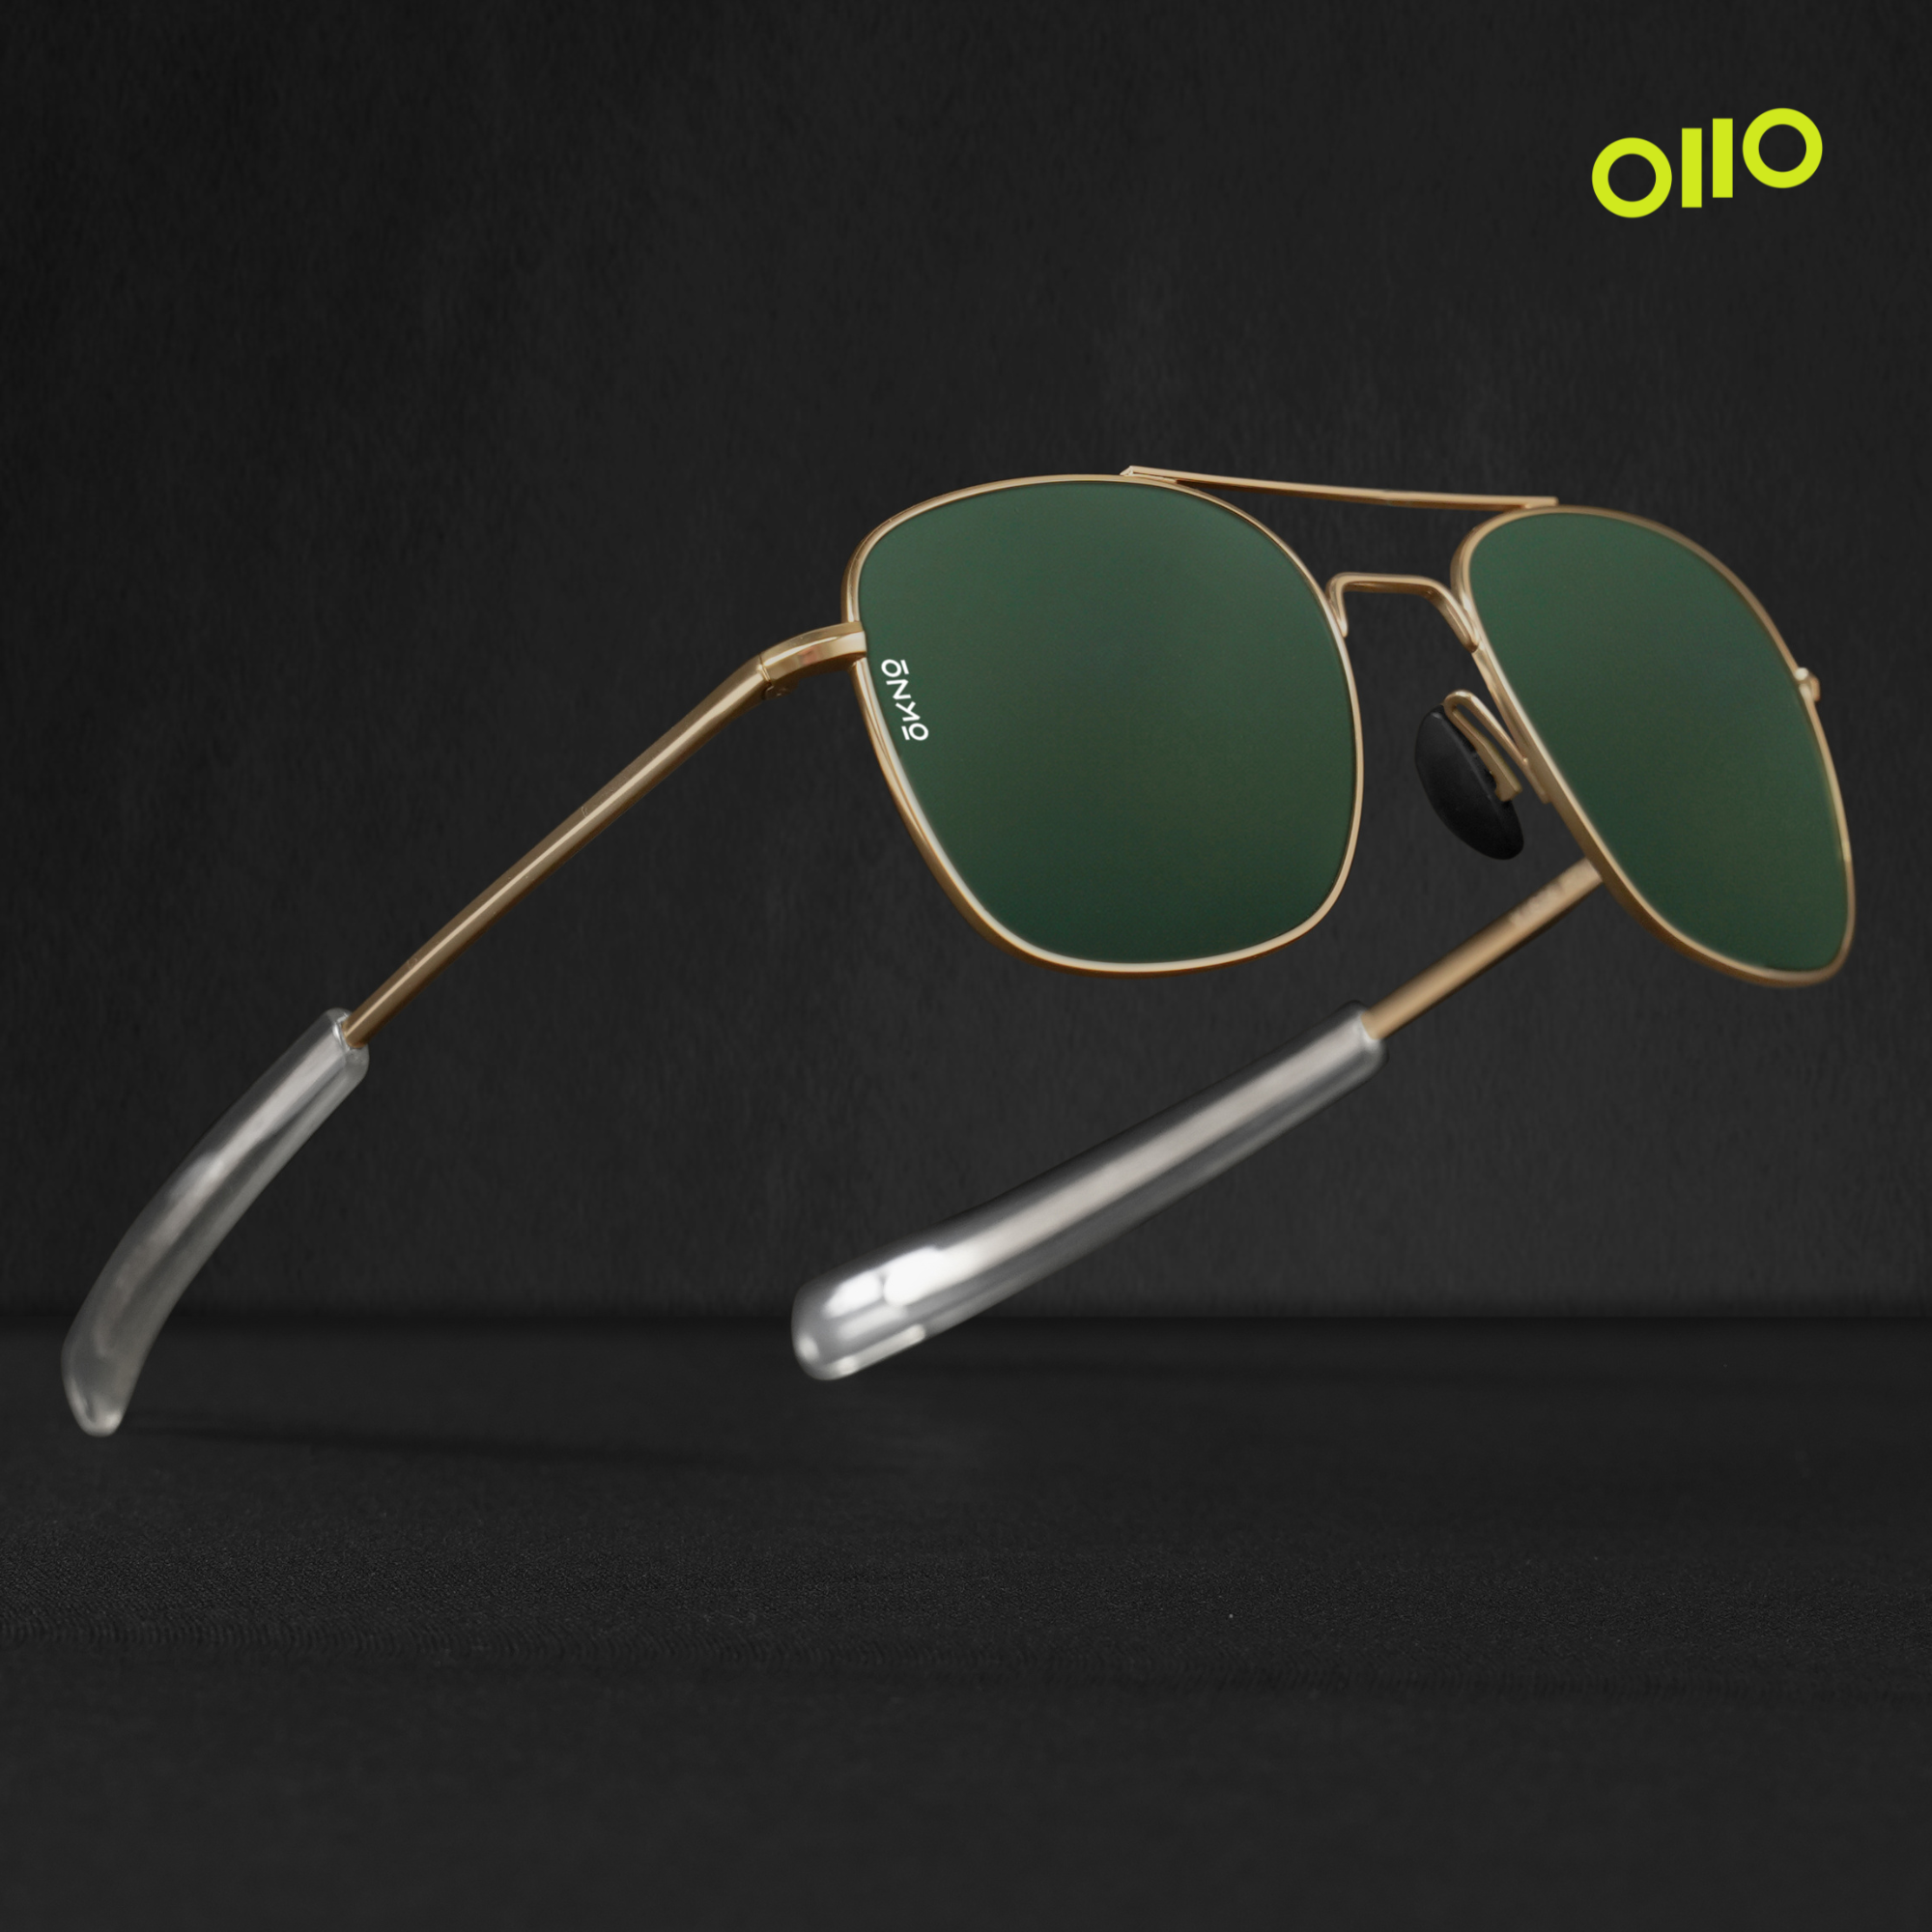 NightFire Green Sunglasses for Men Online at Eyewearlabs